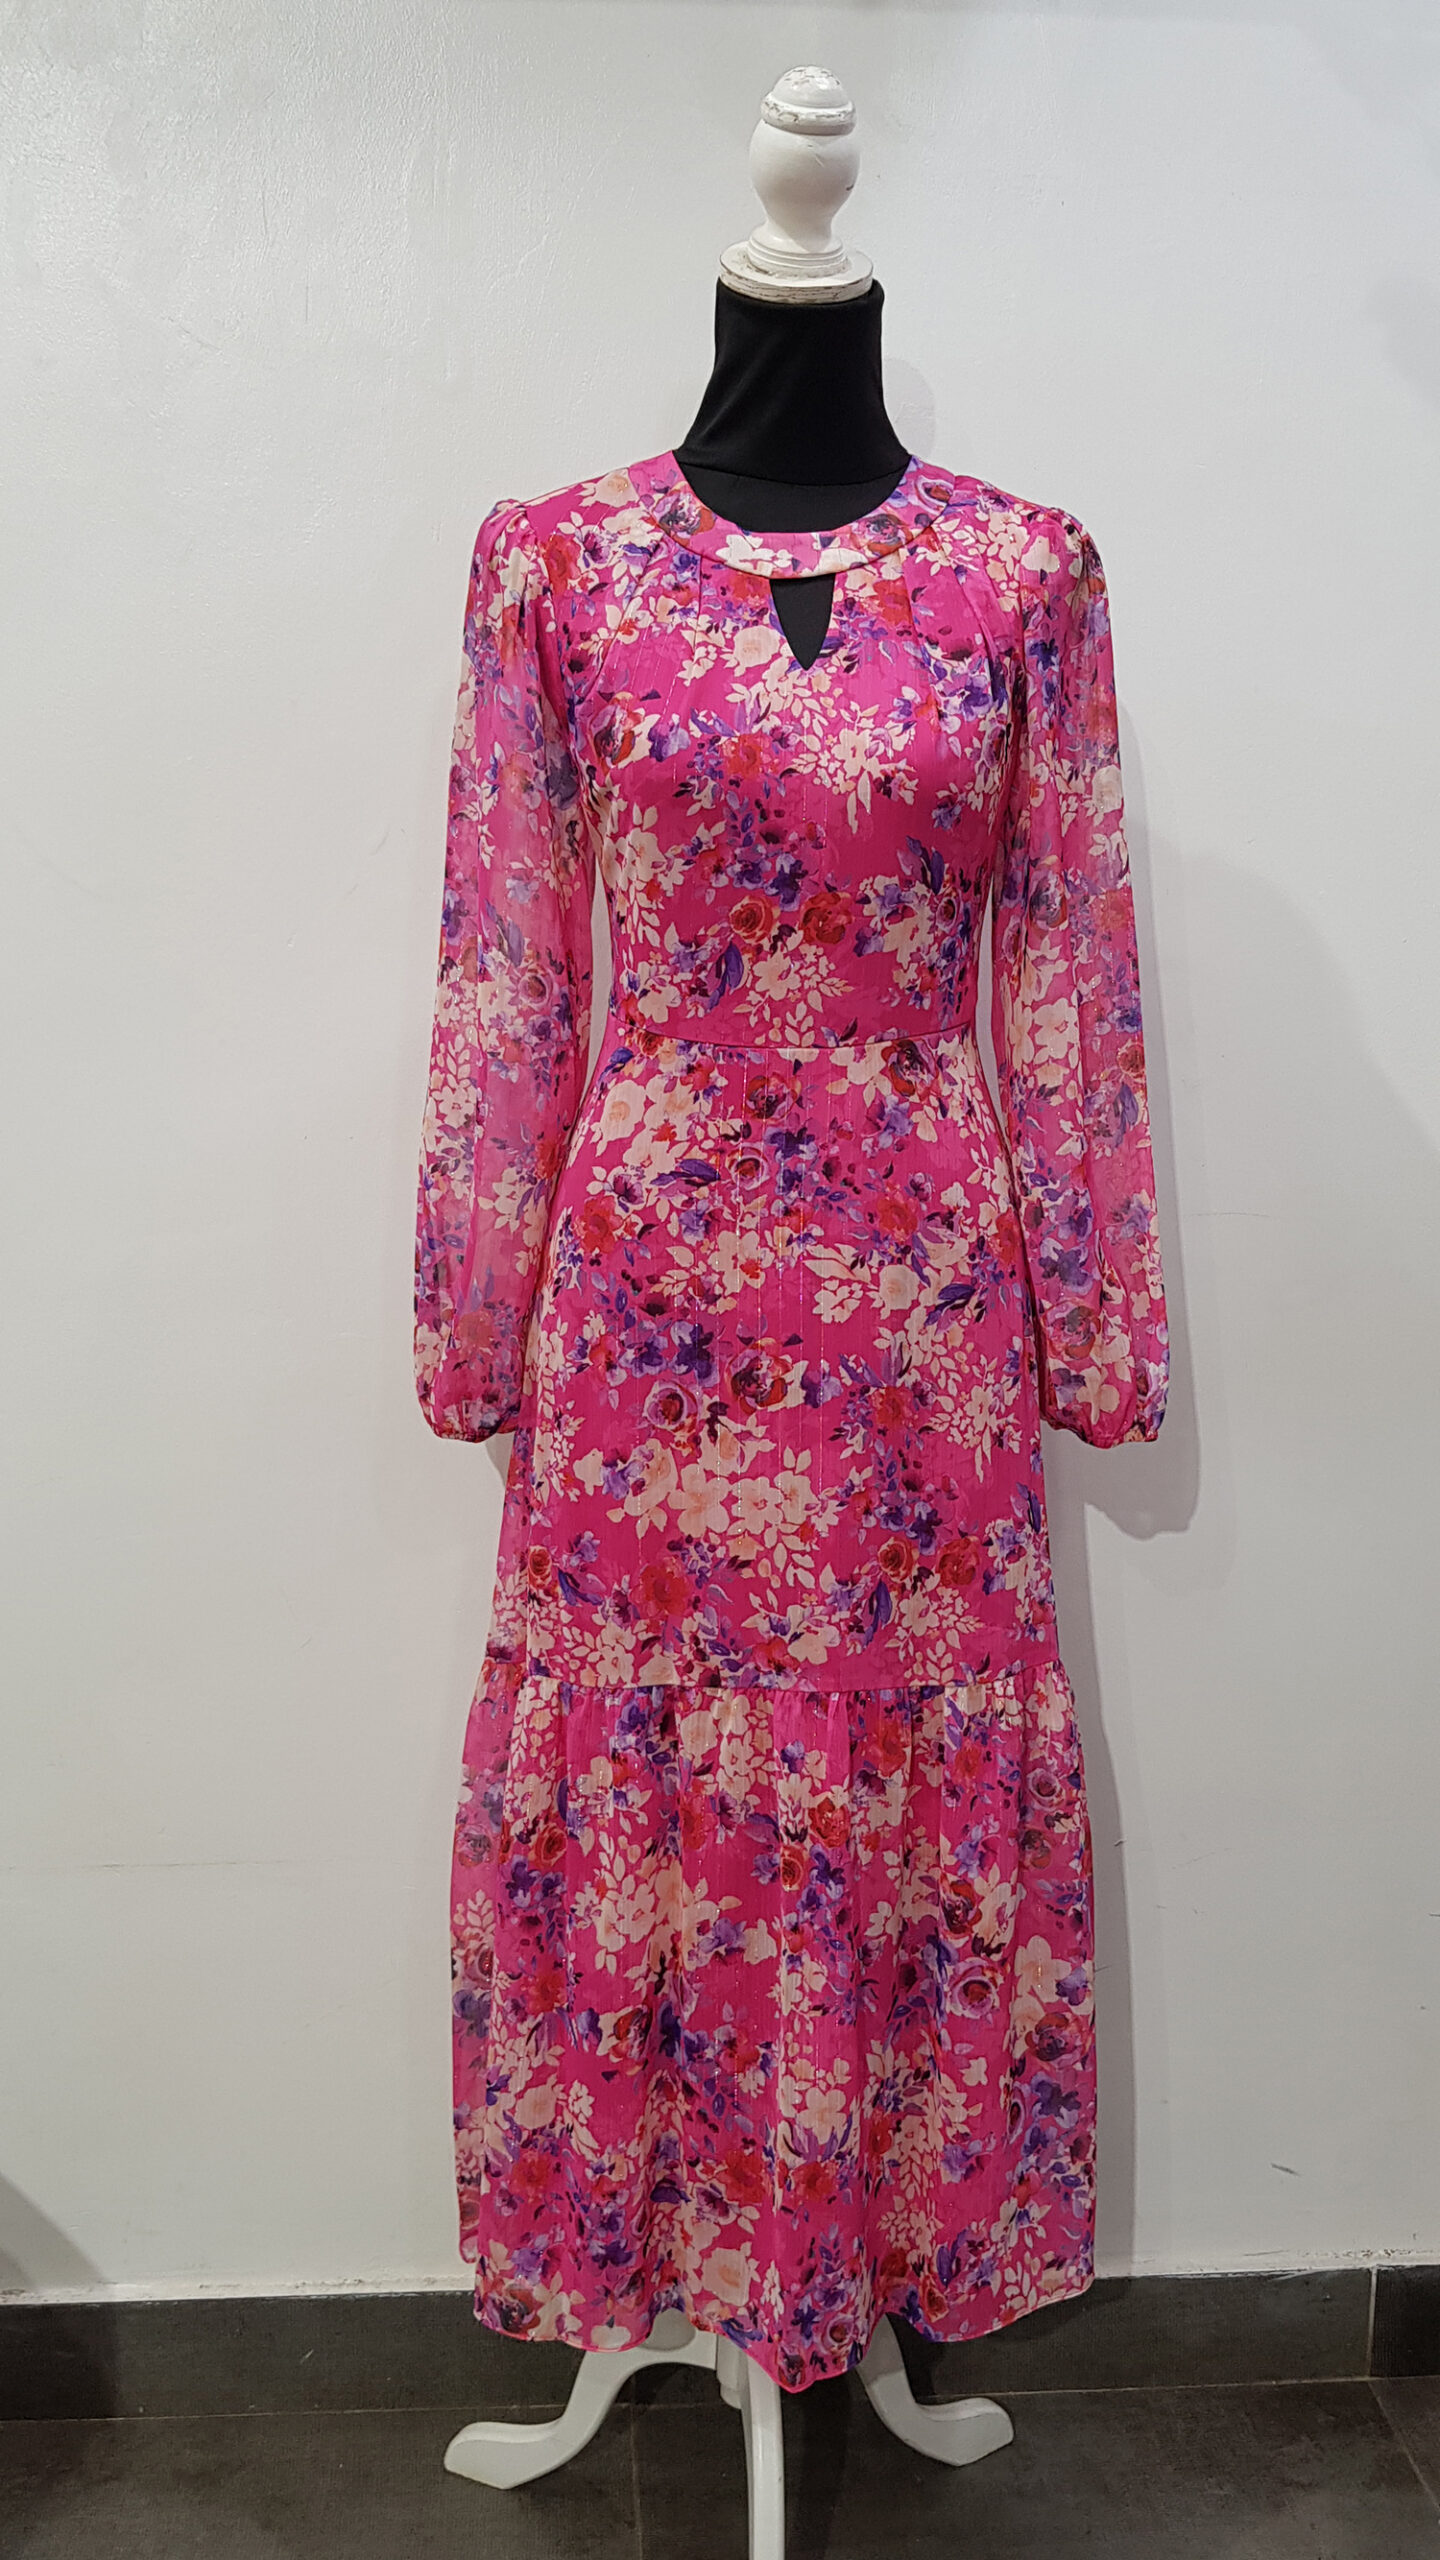 Roman pink floral dresses - Mocas UK Fashion